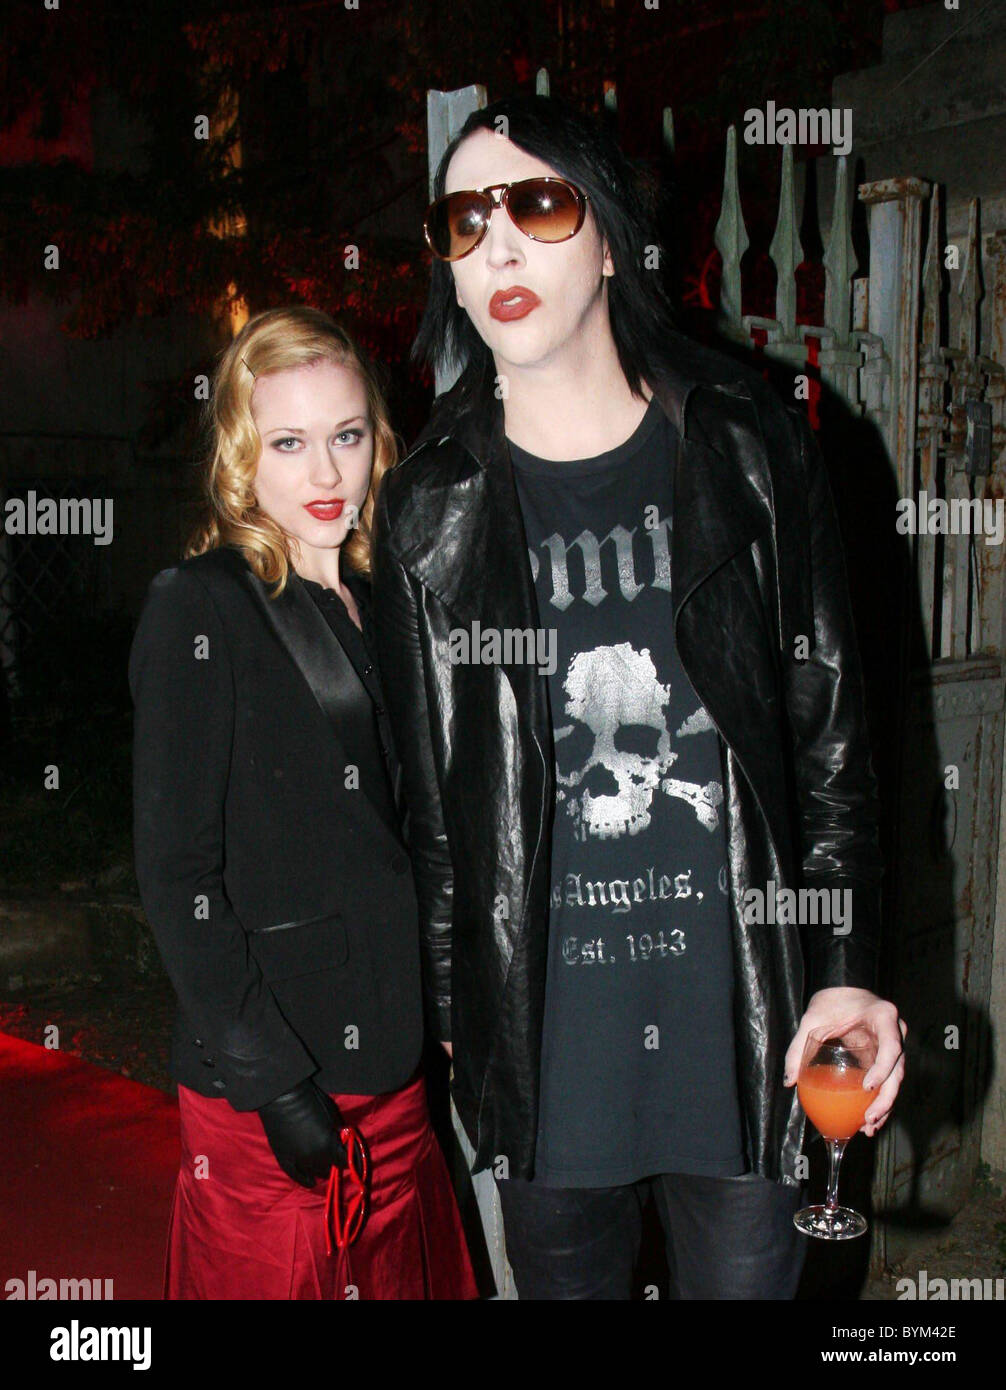 Marilyn Manson and girlfriend Evan Rachel Wood leaving a listen